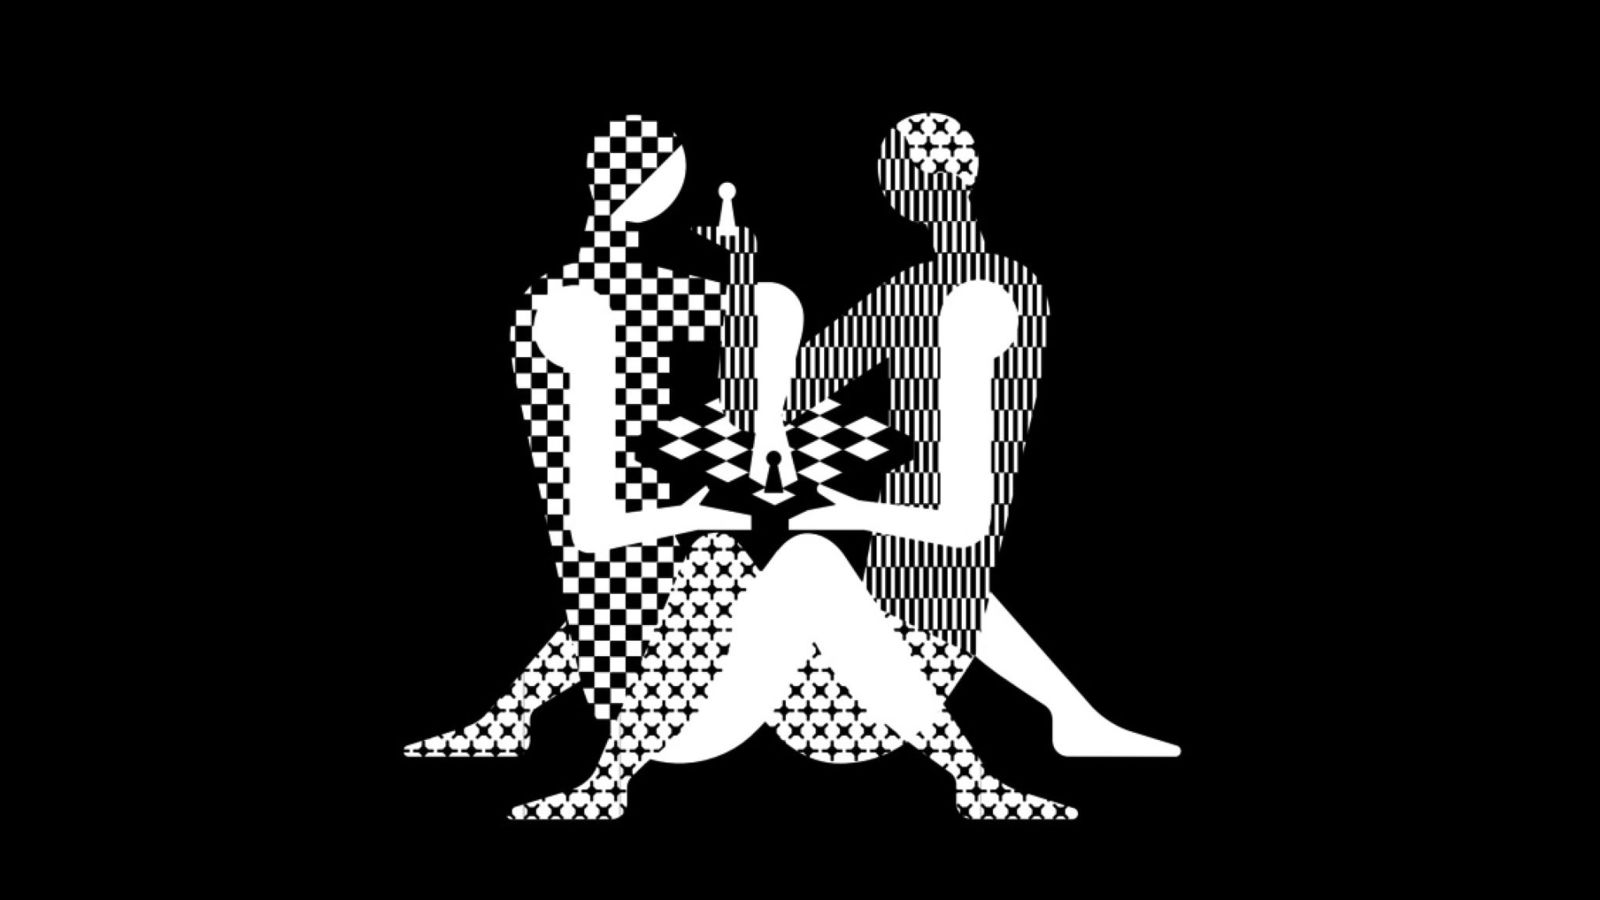 Rabelaisian Championship logo by World Chess Championship - The Chess Kama Sutra